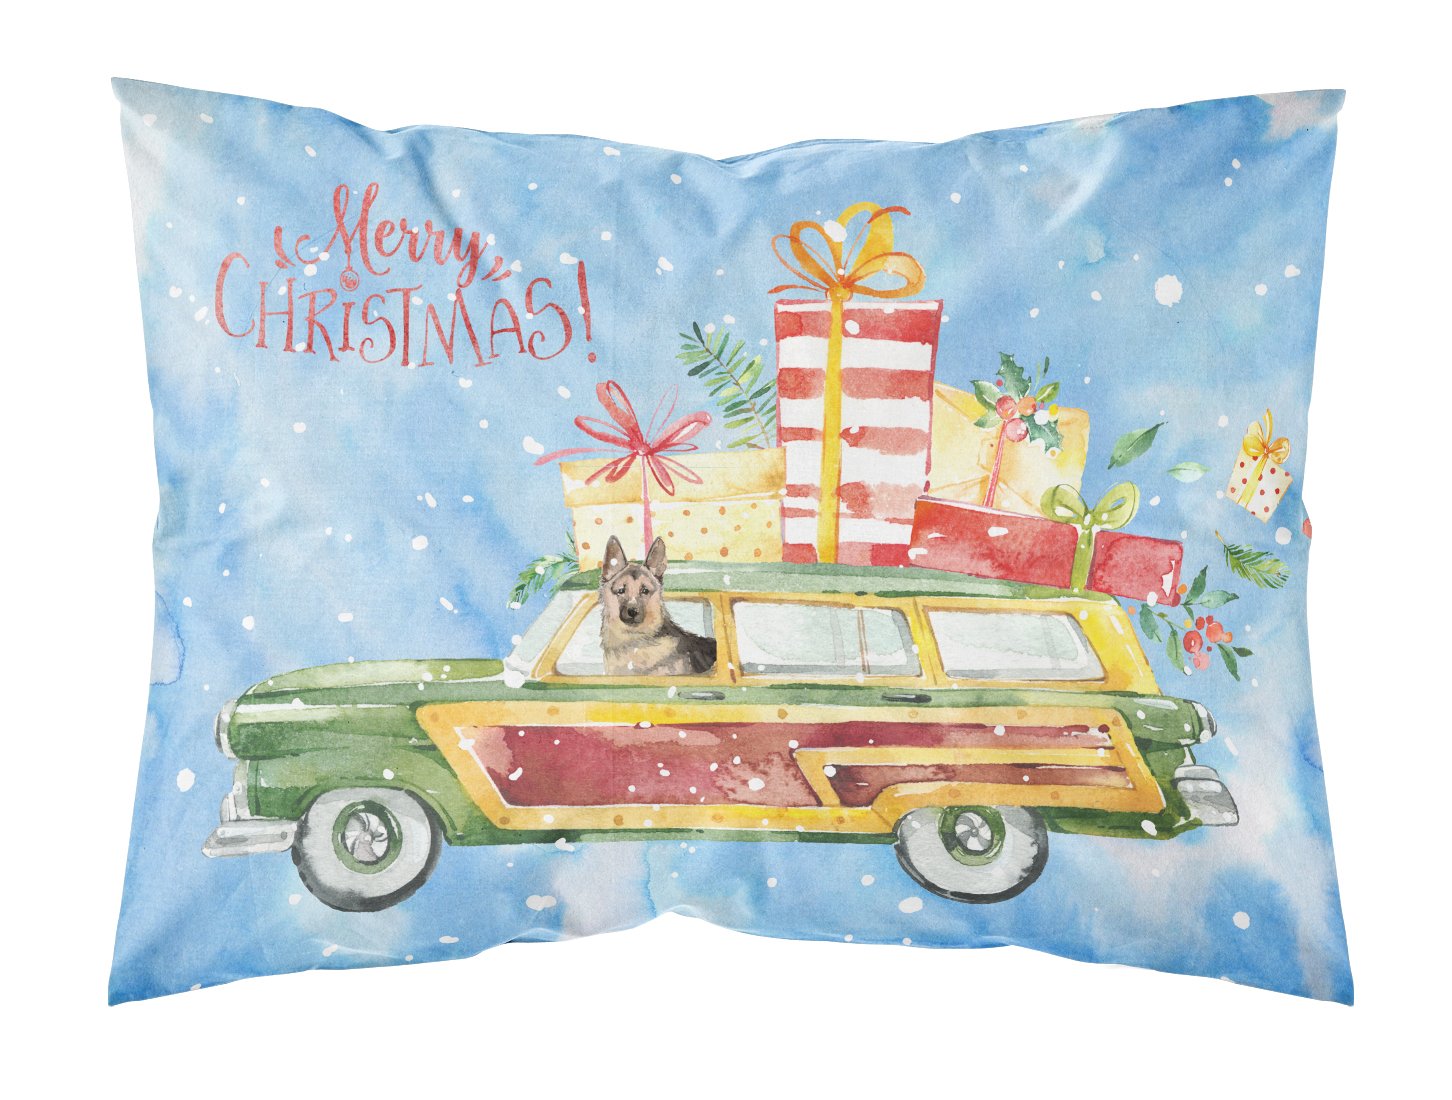 Merry Christmas German Shepherd Fabric Standard Pillowcase CK2455PILLOWCASE by Caroline's Treasures